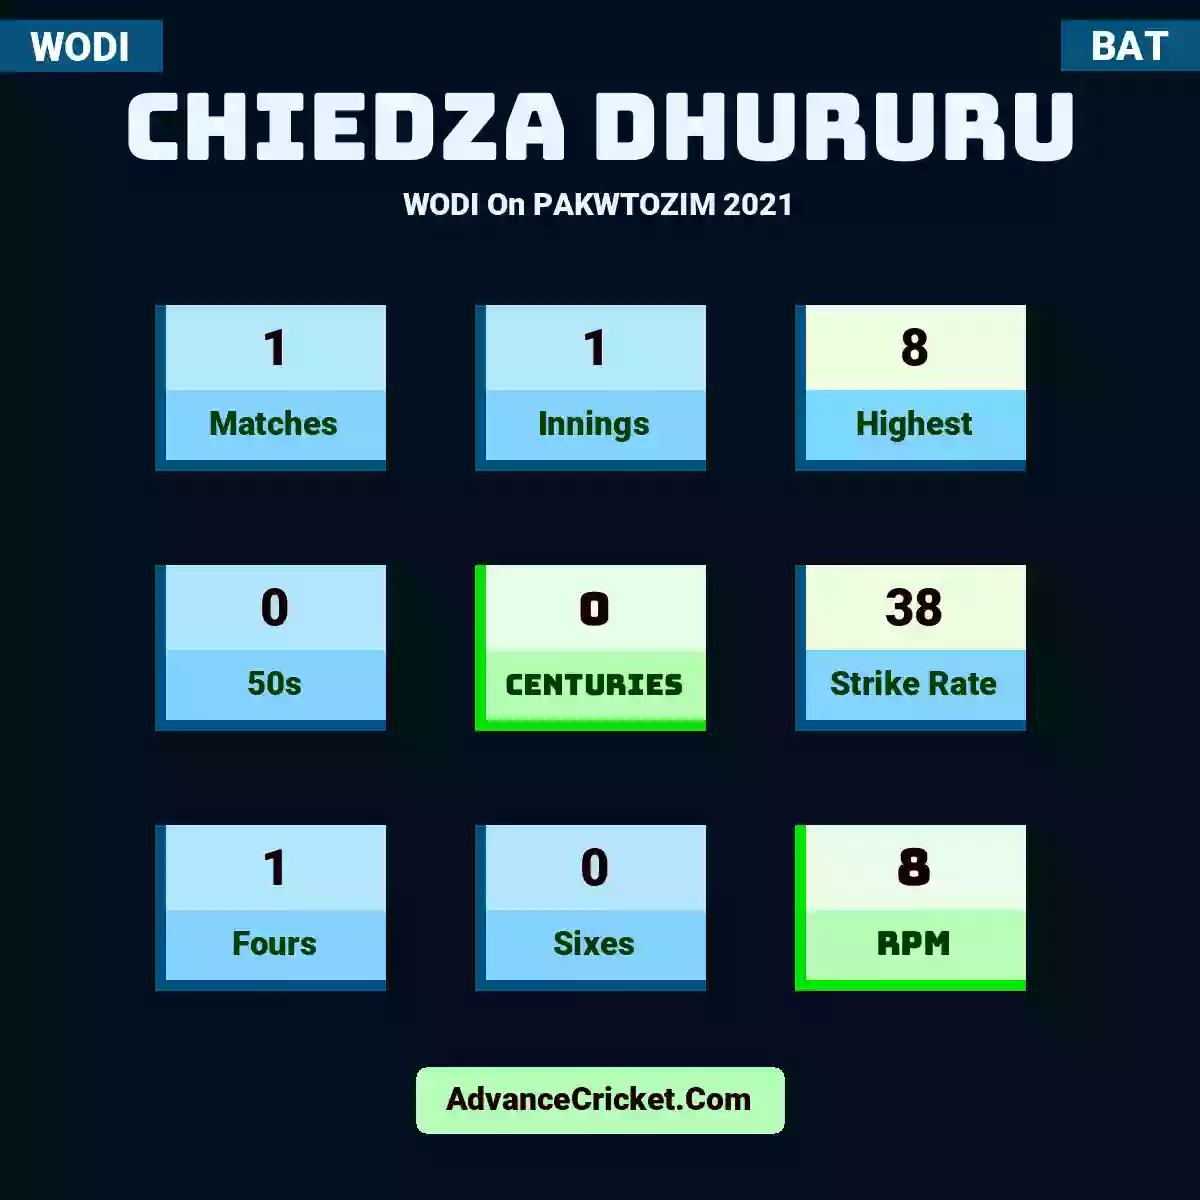 Chiedza Dhururu WODI  On PAKWTOZIM 2021, Chiedza Dhururu played 1 matches, scored 8 runs as highest, 0 half-centuries, and 0 centuries, with a strike rate of 38. C.Dhururu hit 1 fours and 0 sixes, with an RPM of 8.